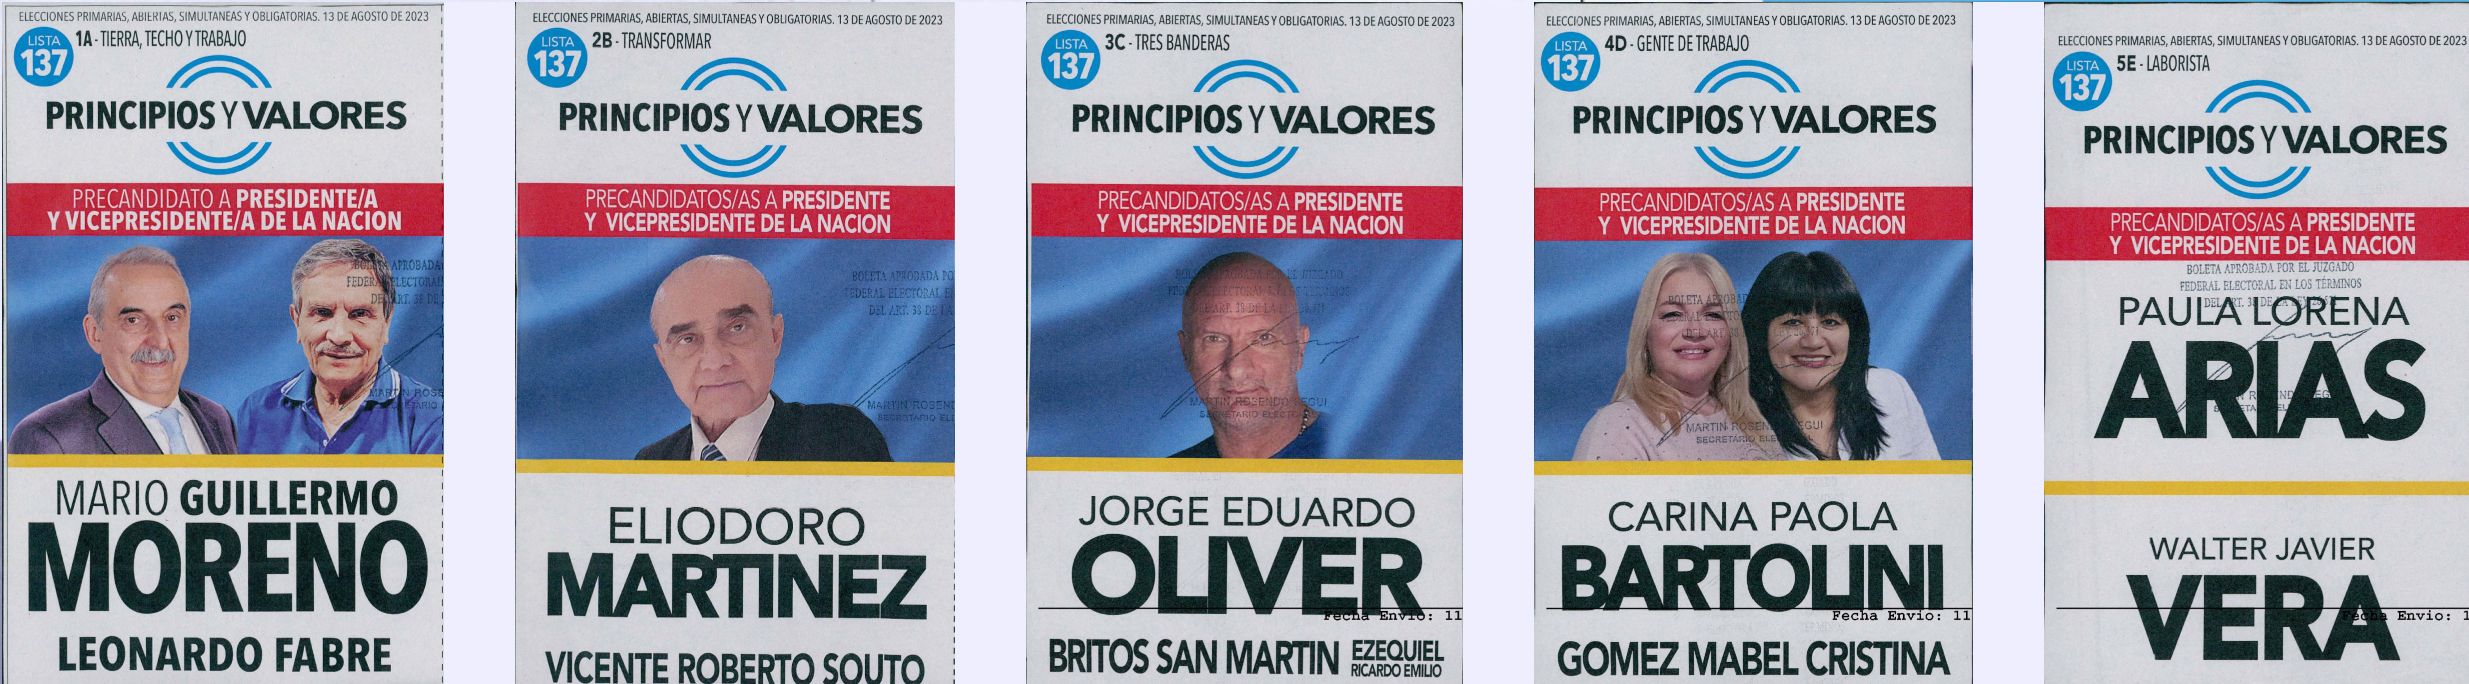 Lista 137, la interna del Frente Principios y Valores. 137A: Guillermo Moreno; 137B: Eliodoro Martínez; 137C: Jorge Oliver; 137D: Carina Bartolini; 137E: Paula Arias.